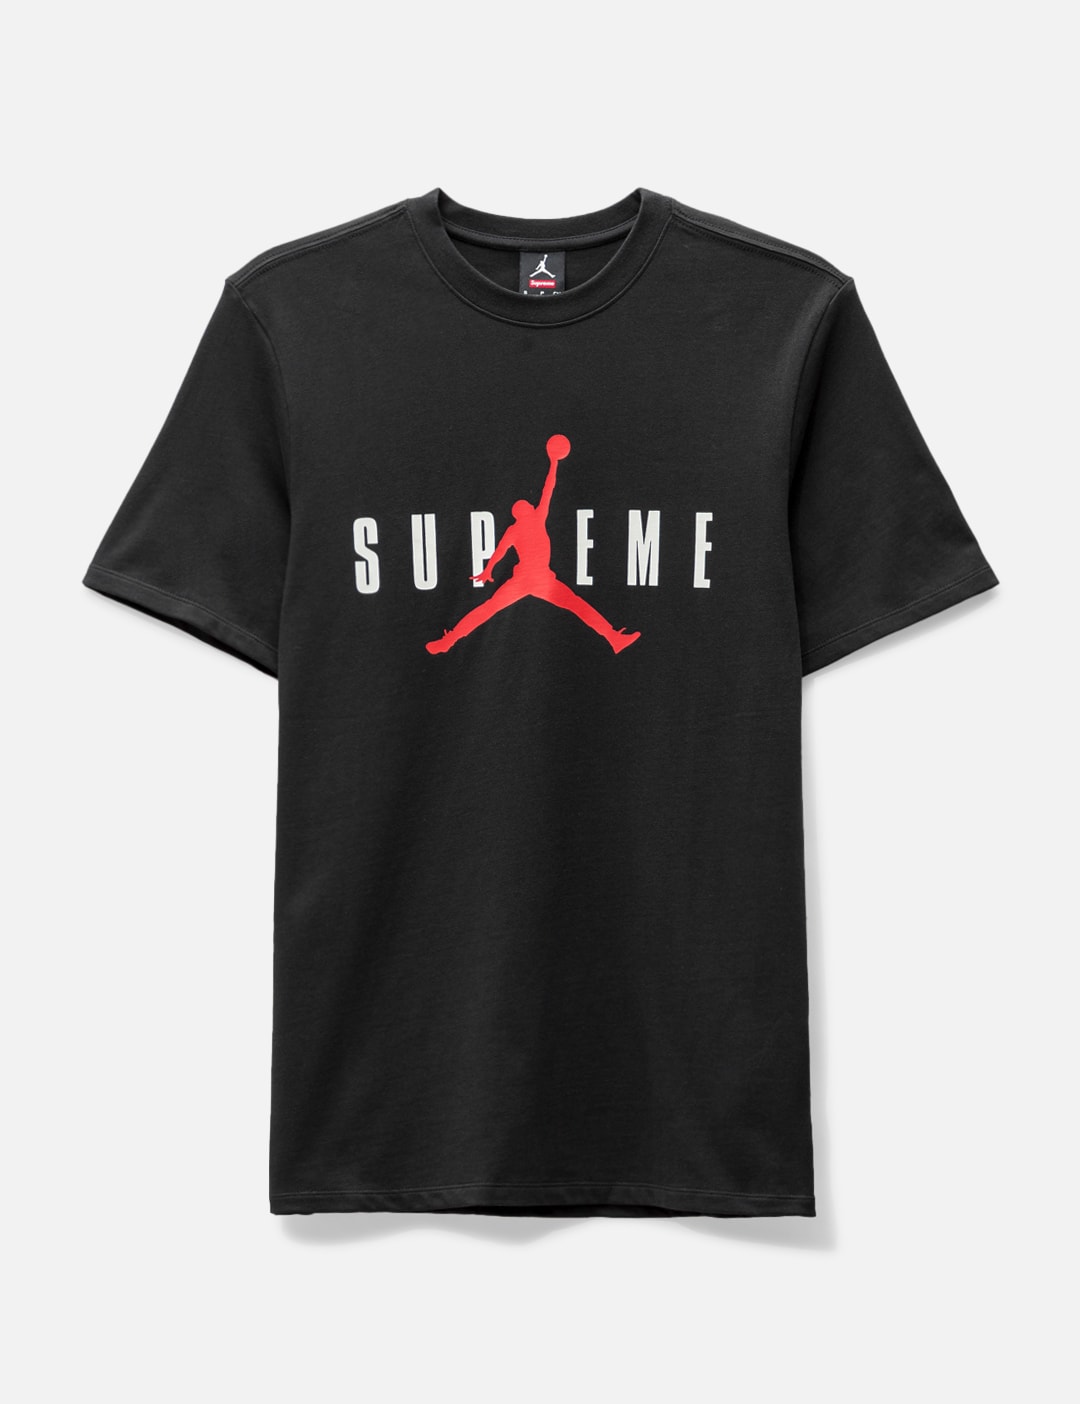 Jordan Brand - Supreme X Jordan Tee